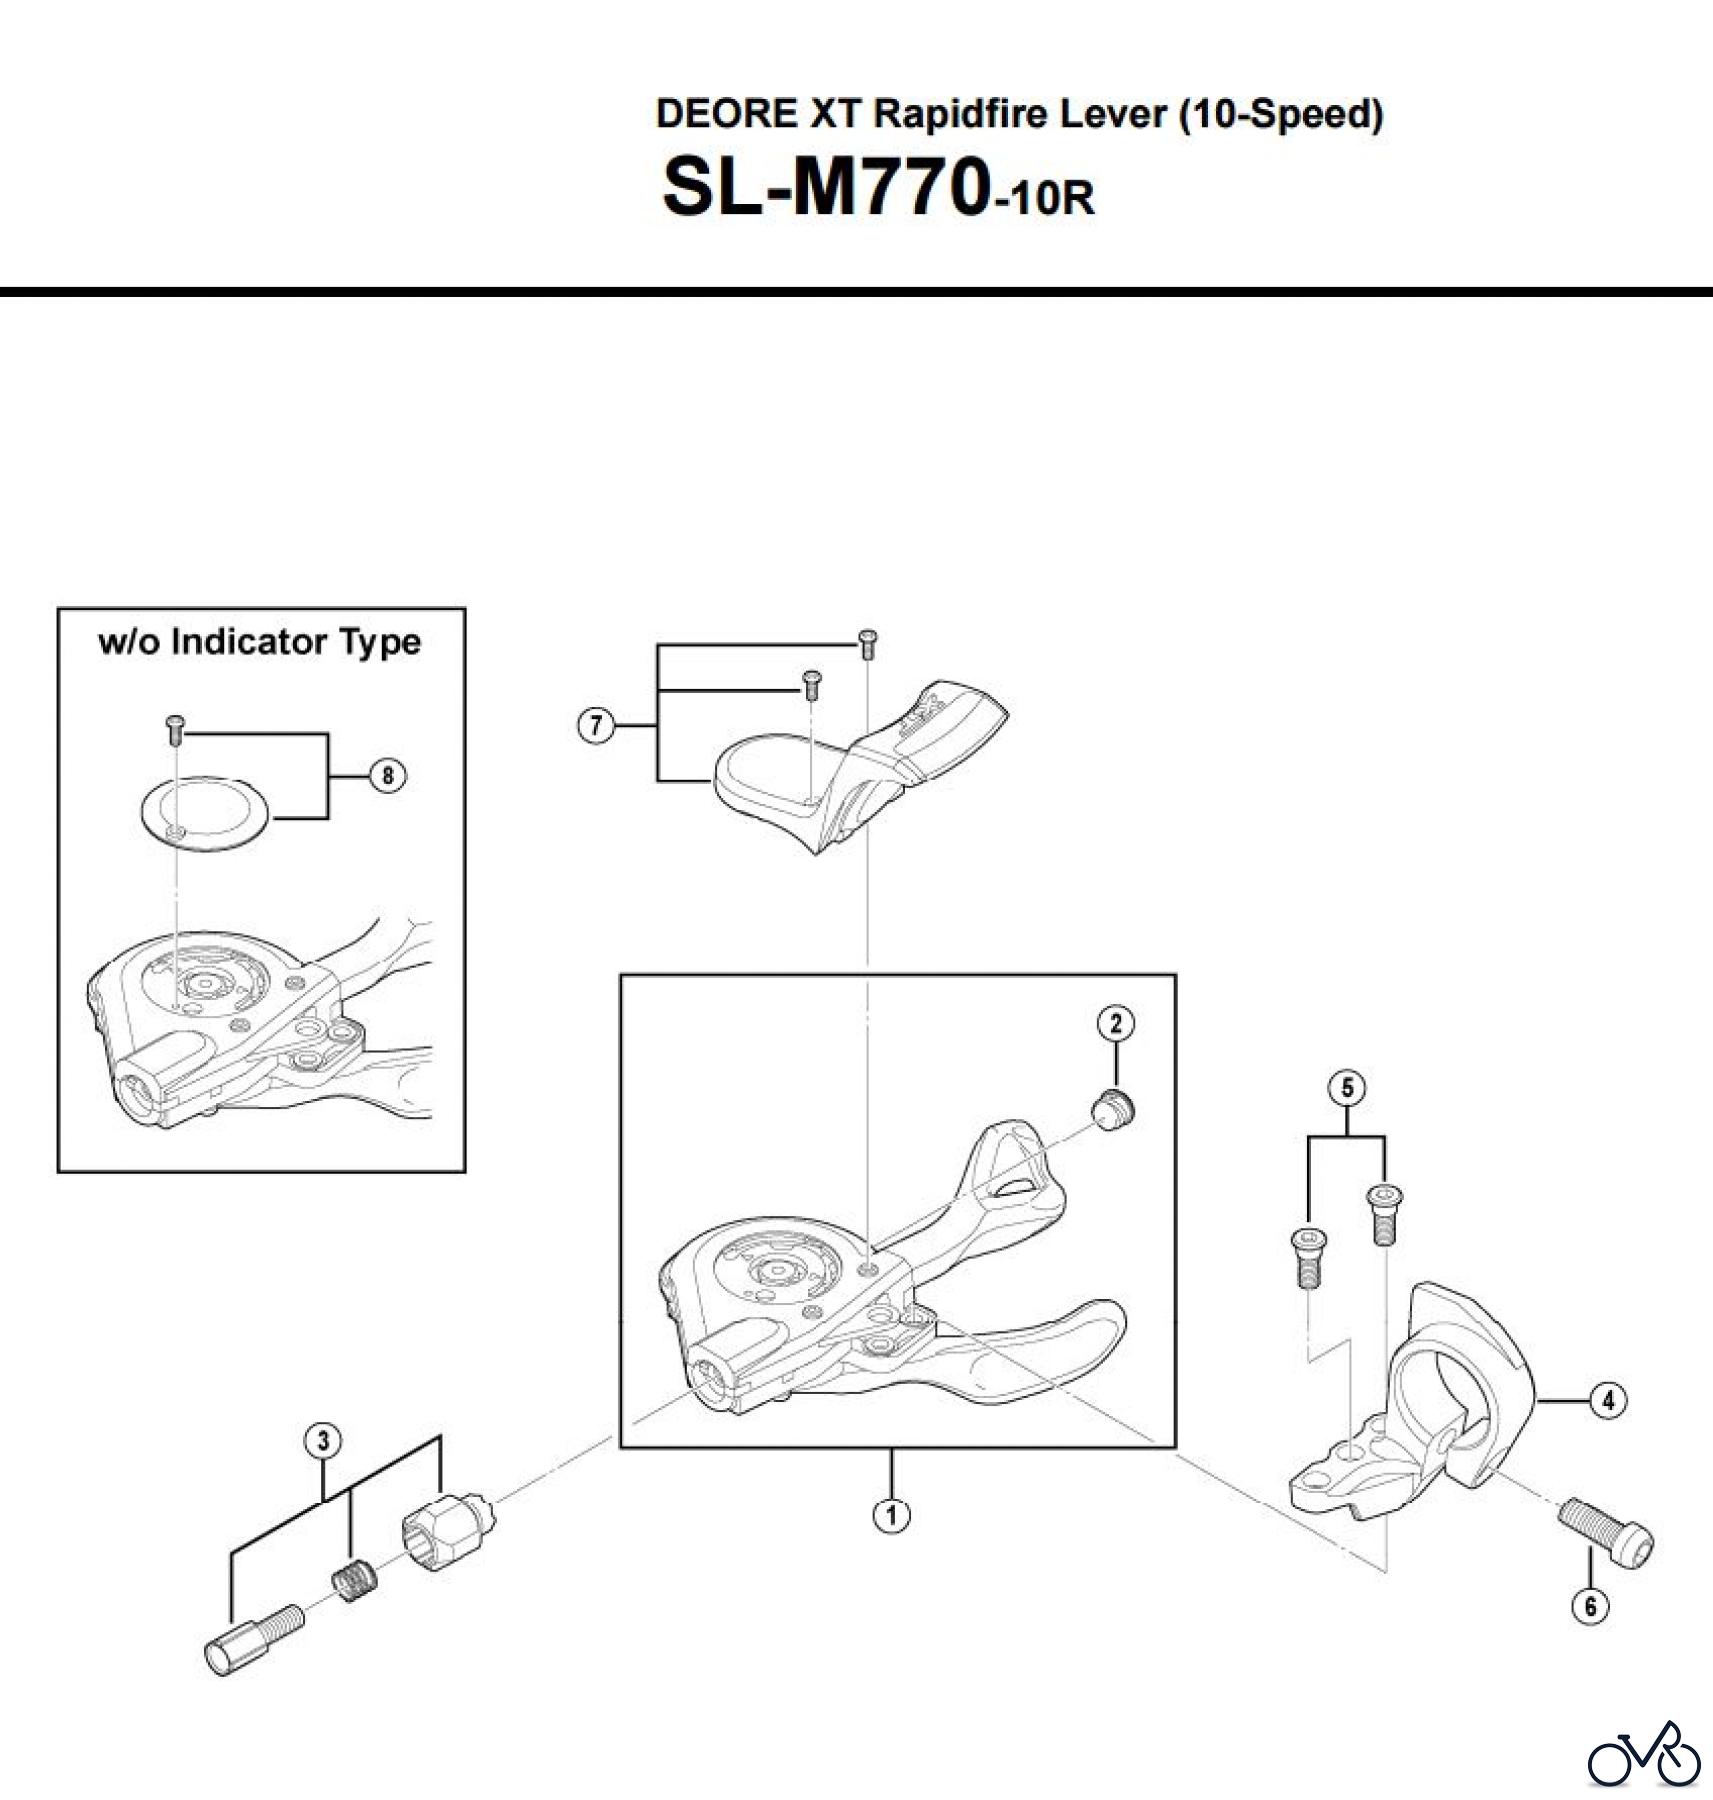  Shimano SL Shift Lever - Schalthebel SL-M770-10R DEORE XT Rapidfire Lever (10-Speed)